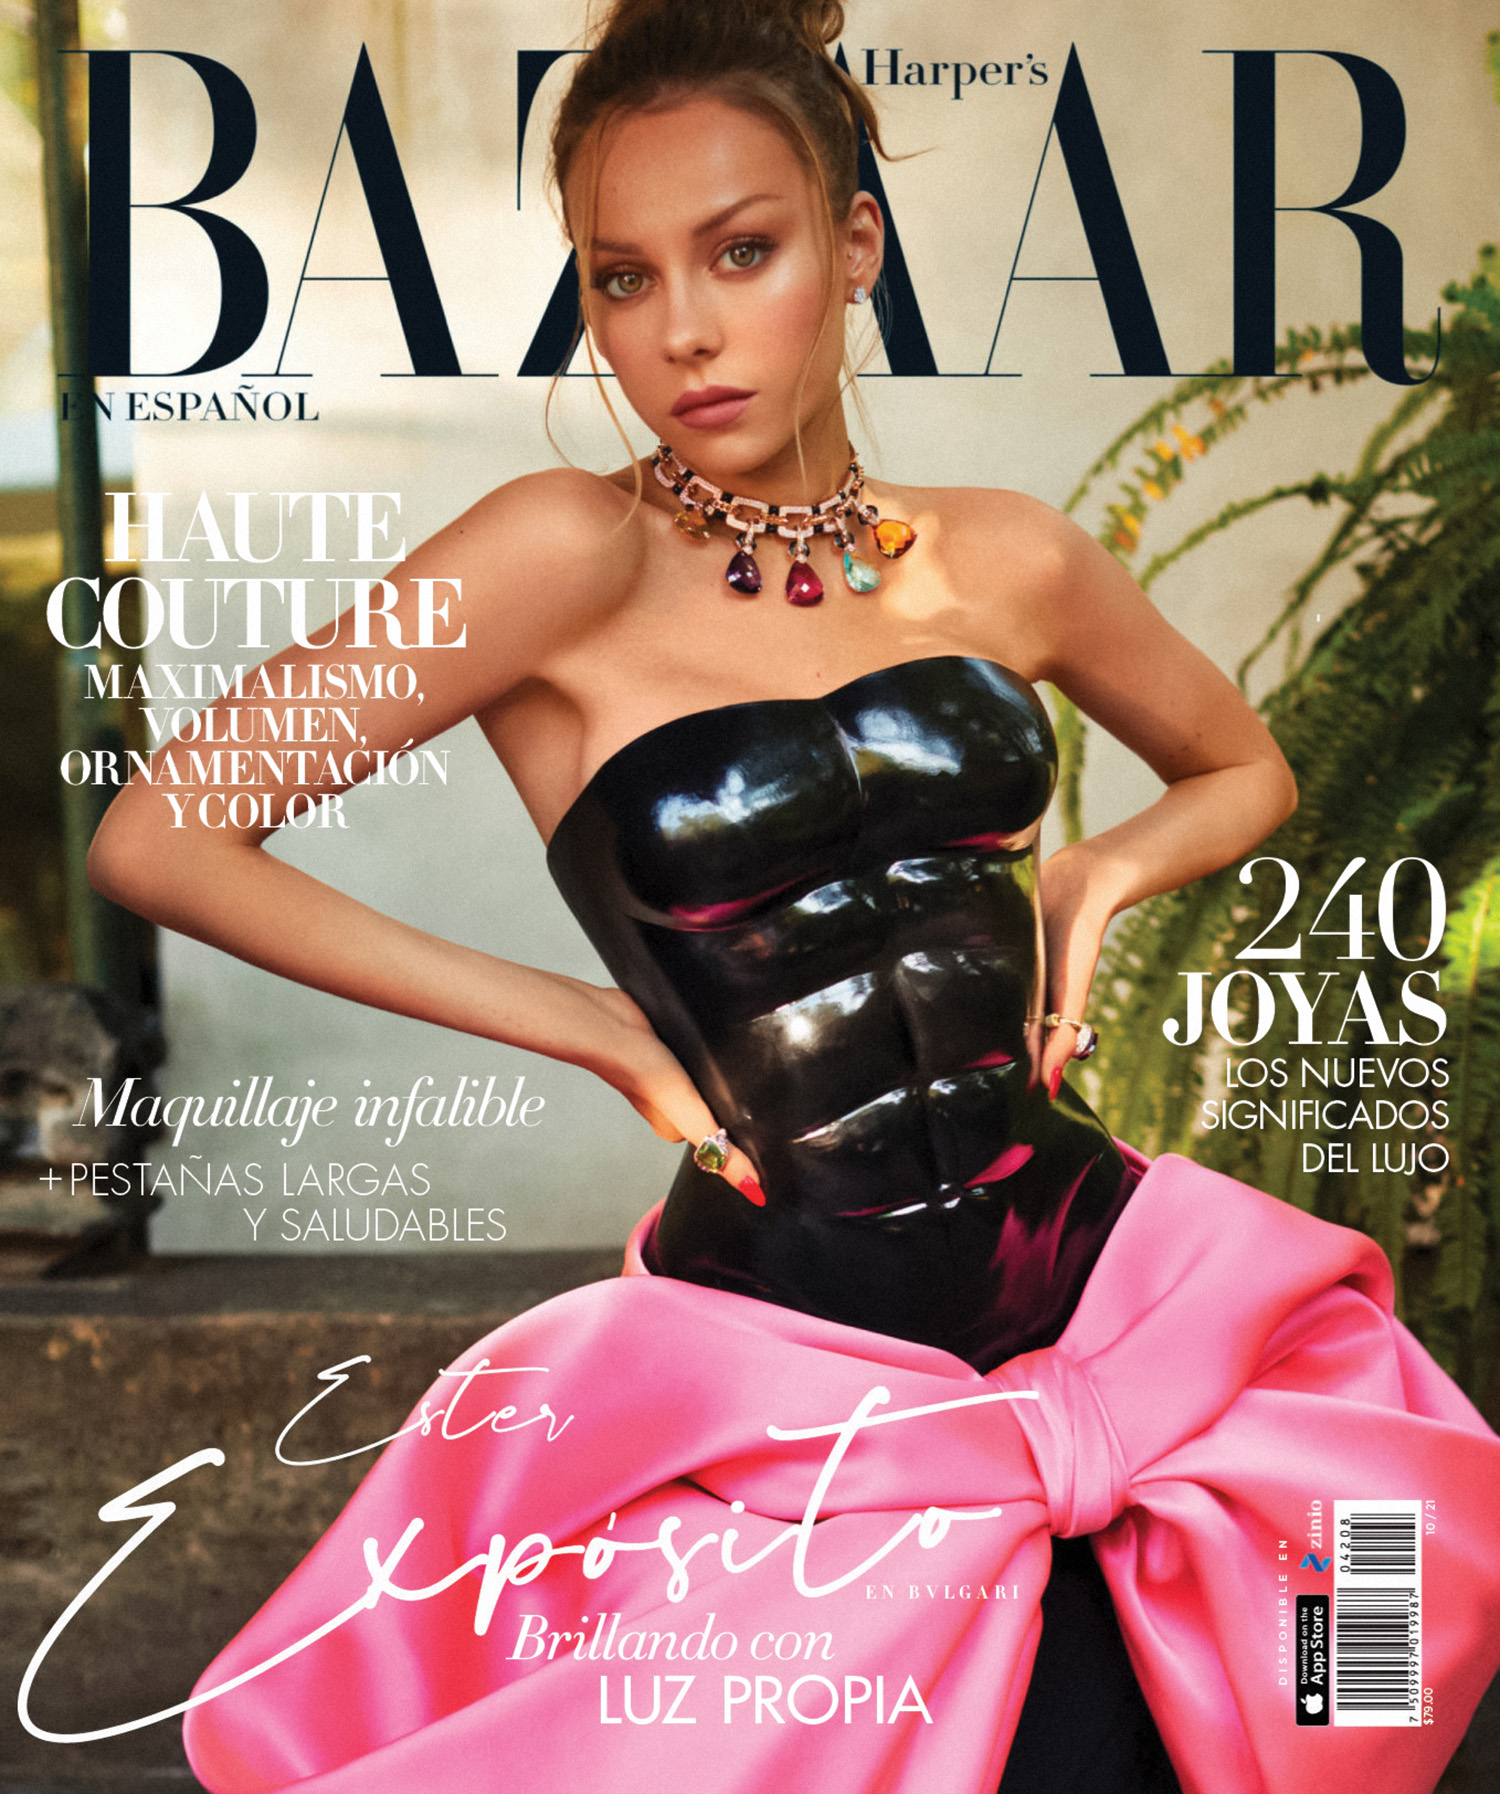 Ester Expósito covers Harper’s Bazaar Mexico & Latin America October 2021 by Xavi Gordo